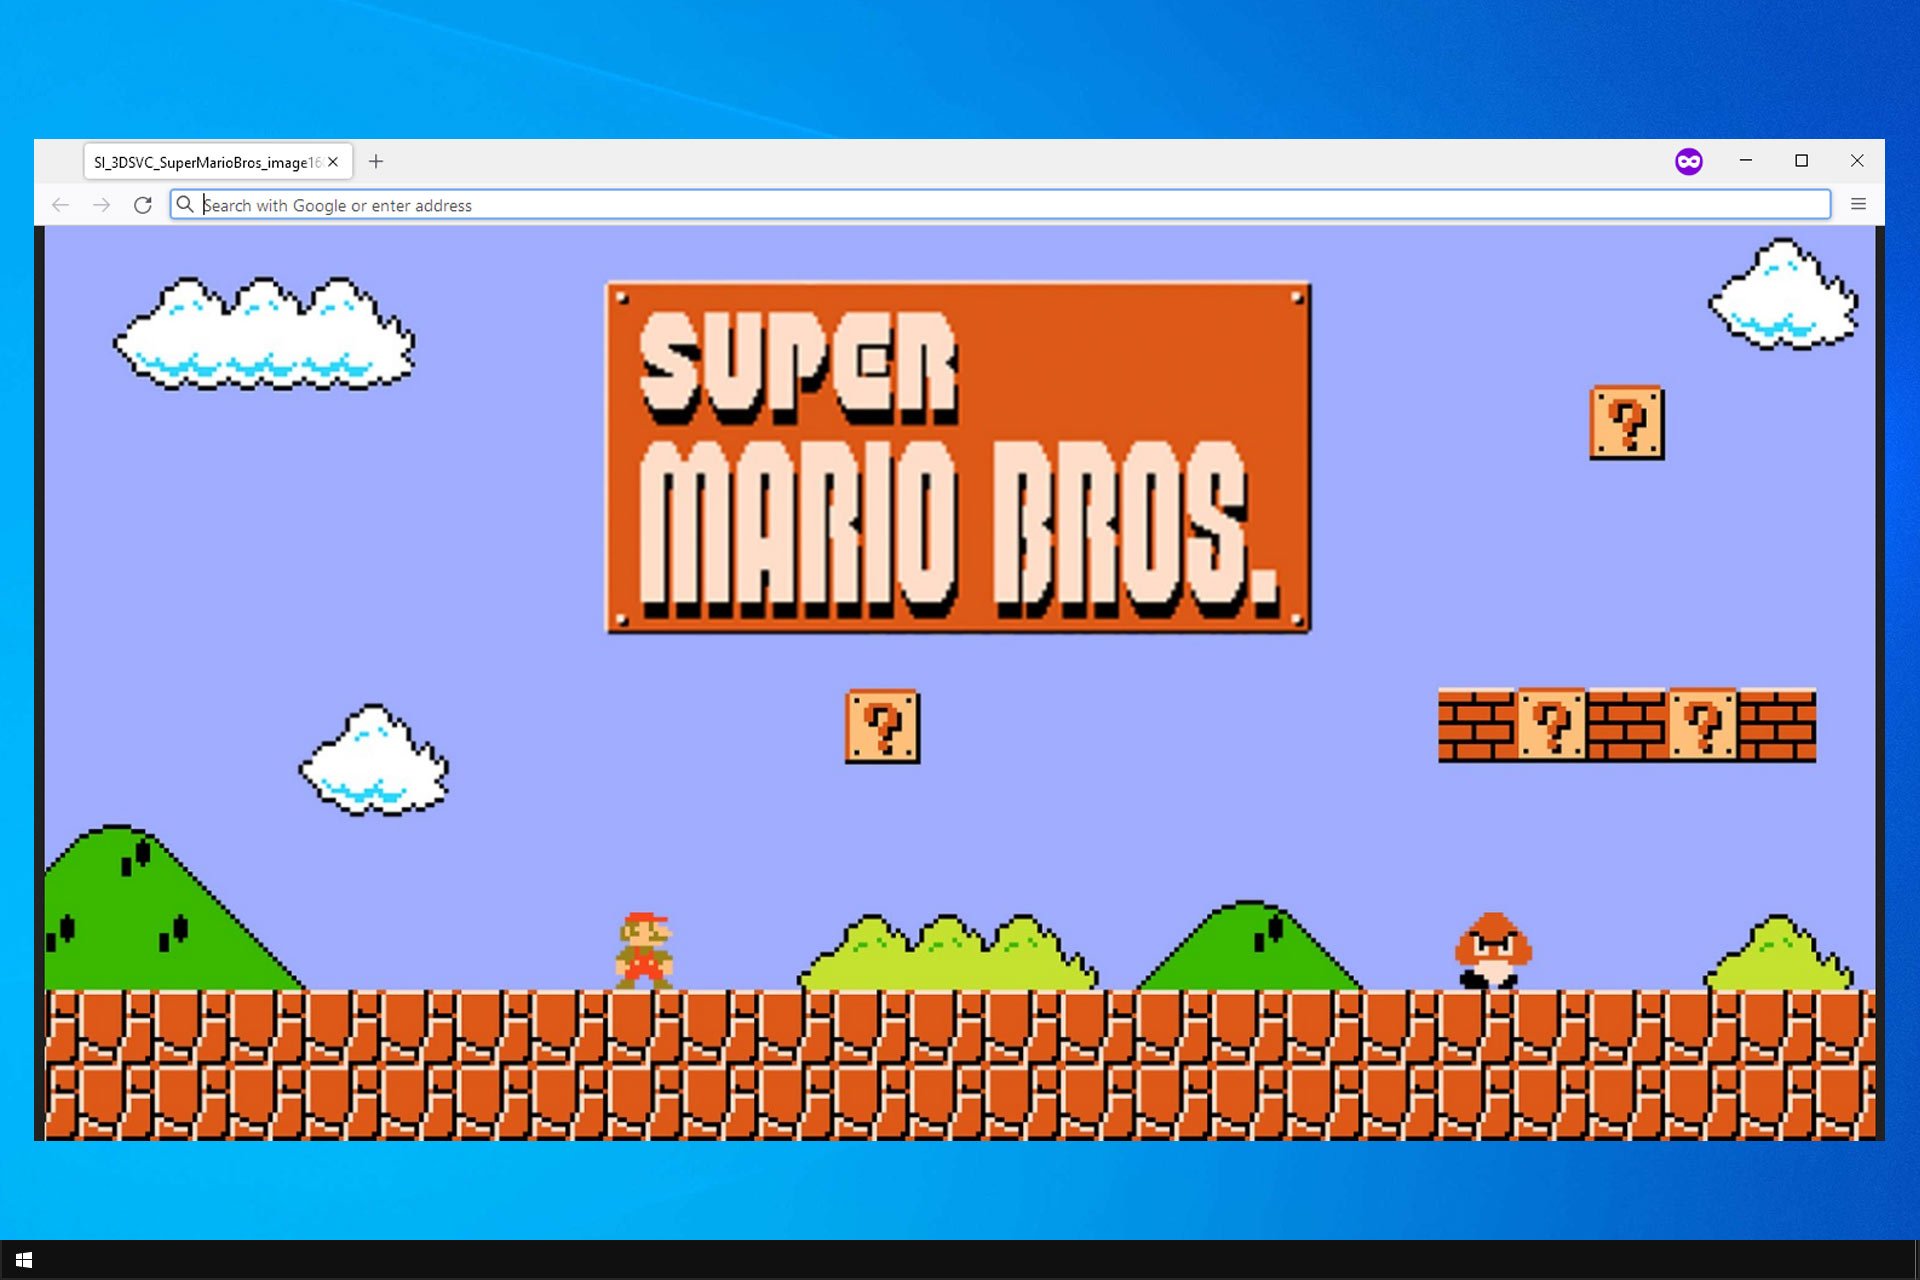 Full Screen Mario allows you to play Super Mario Bros. on your